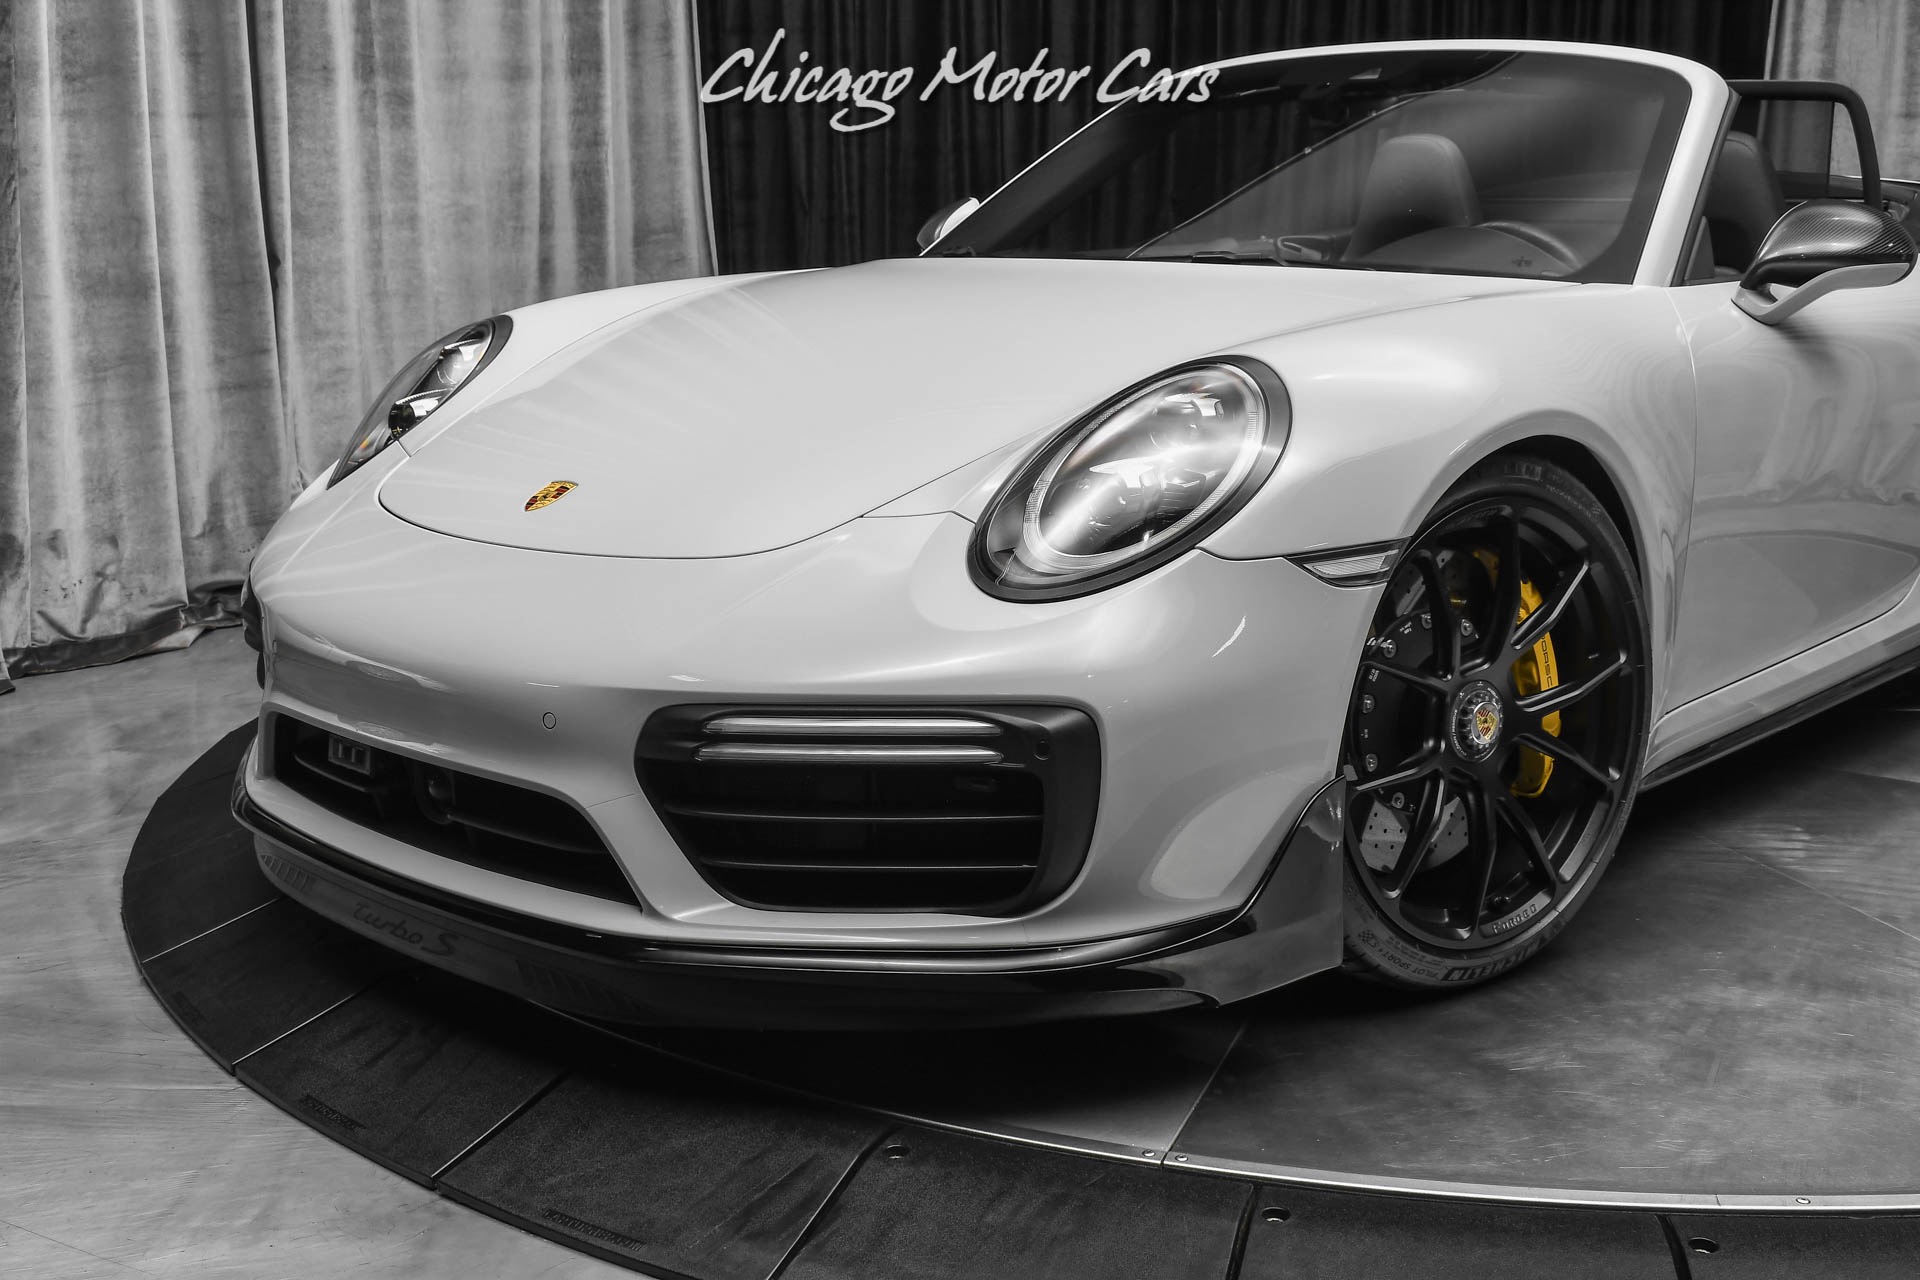 Used-2019-Porsche-911-Turbo-S-Aerokit-Turbo-Cabriolet-MSRP-232k-Upgrades-Chalk-Stunning